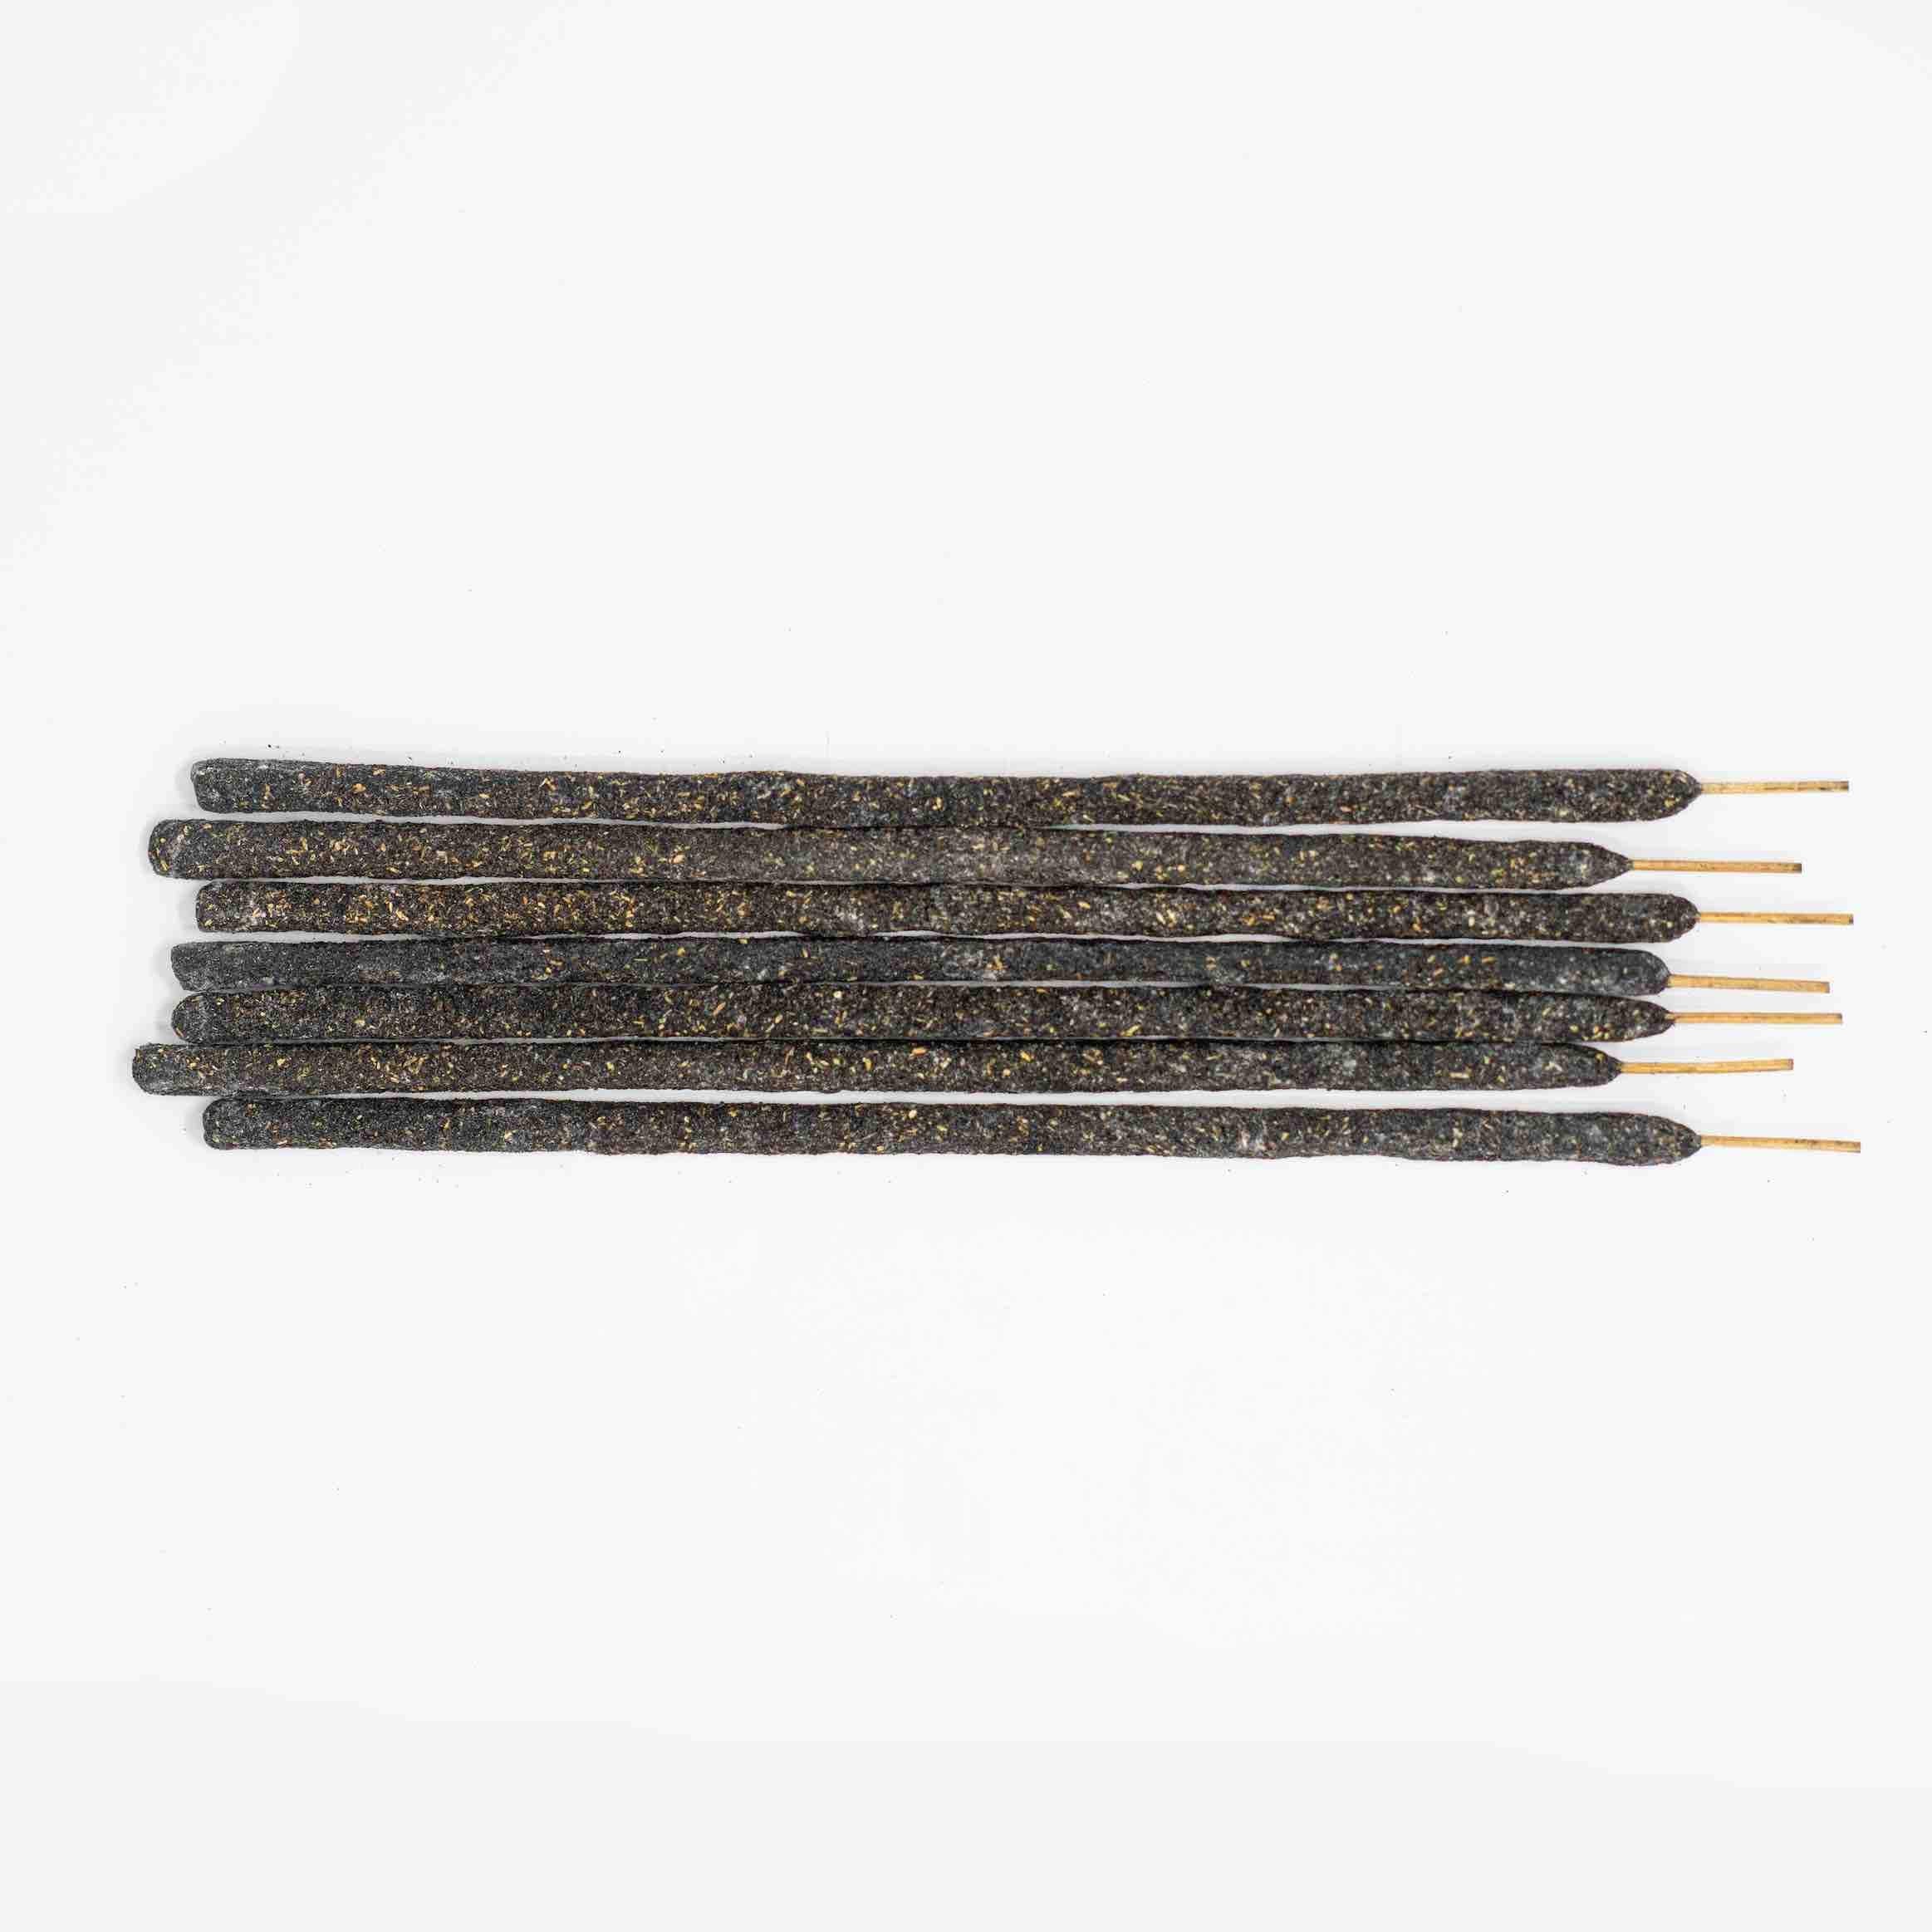 A pile of Wild Harvested Black Copal incense sticks